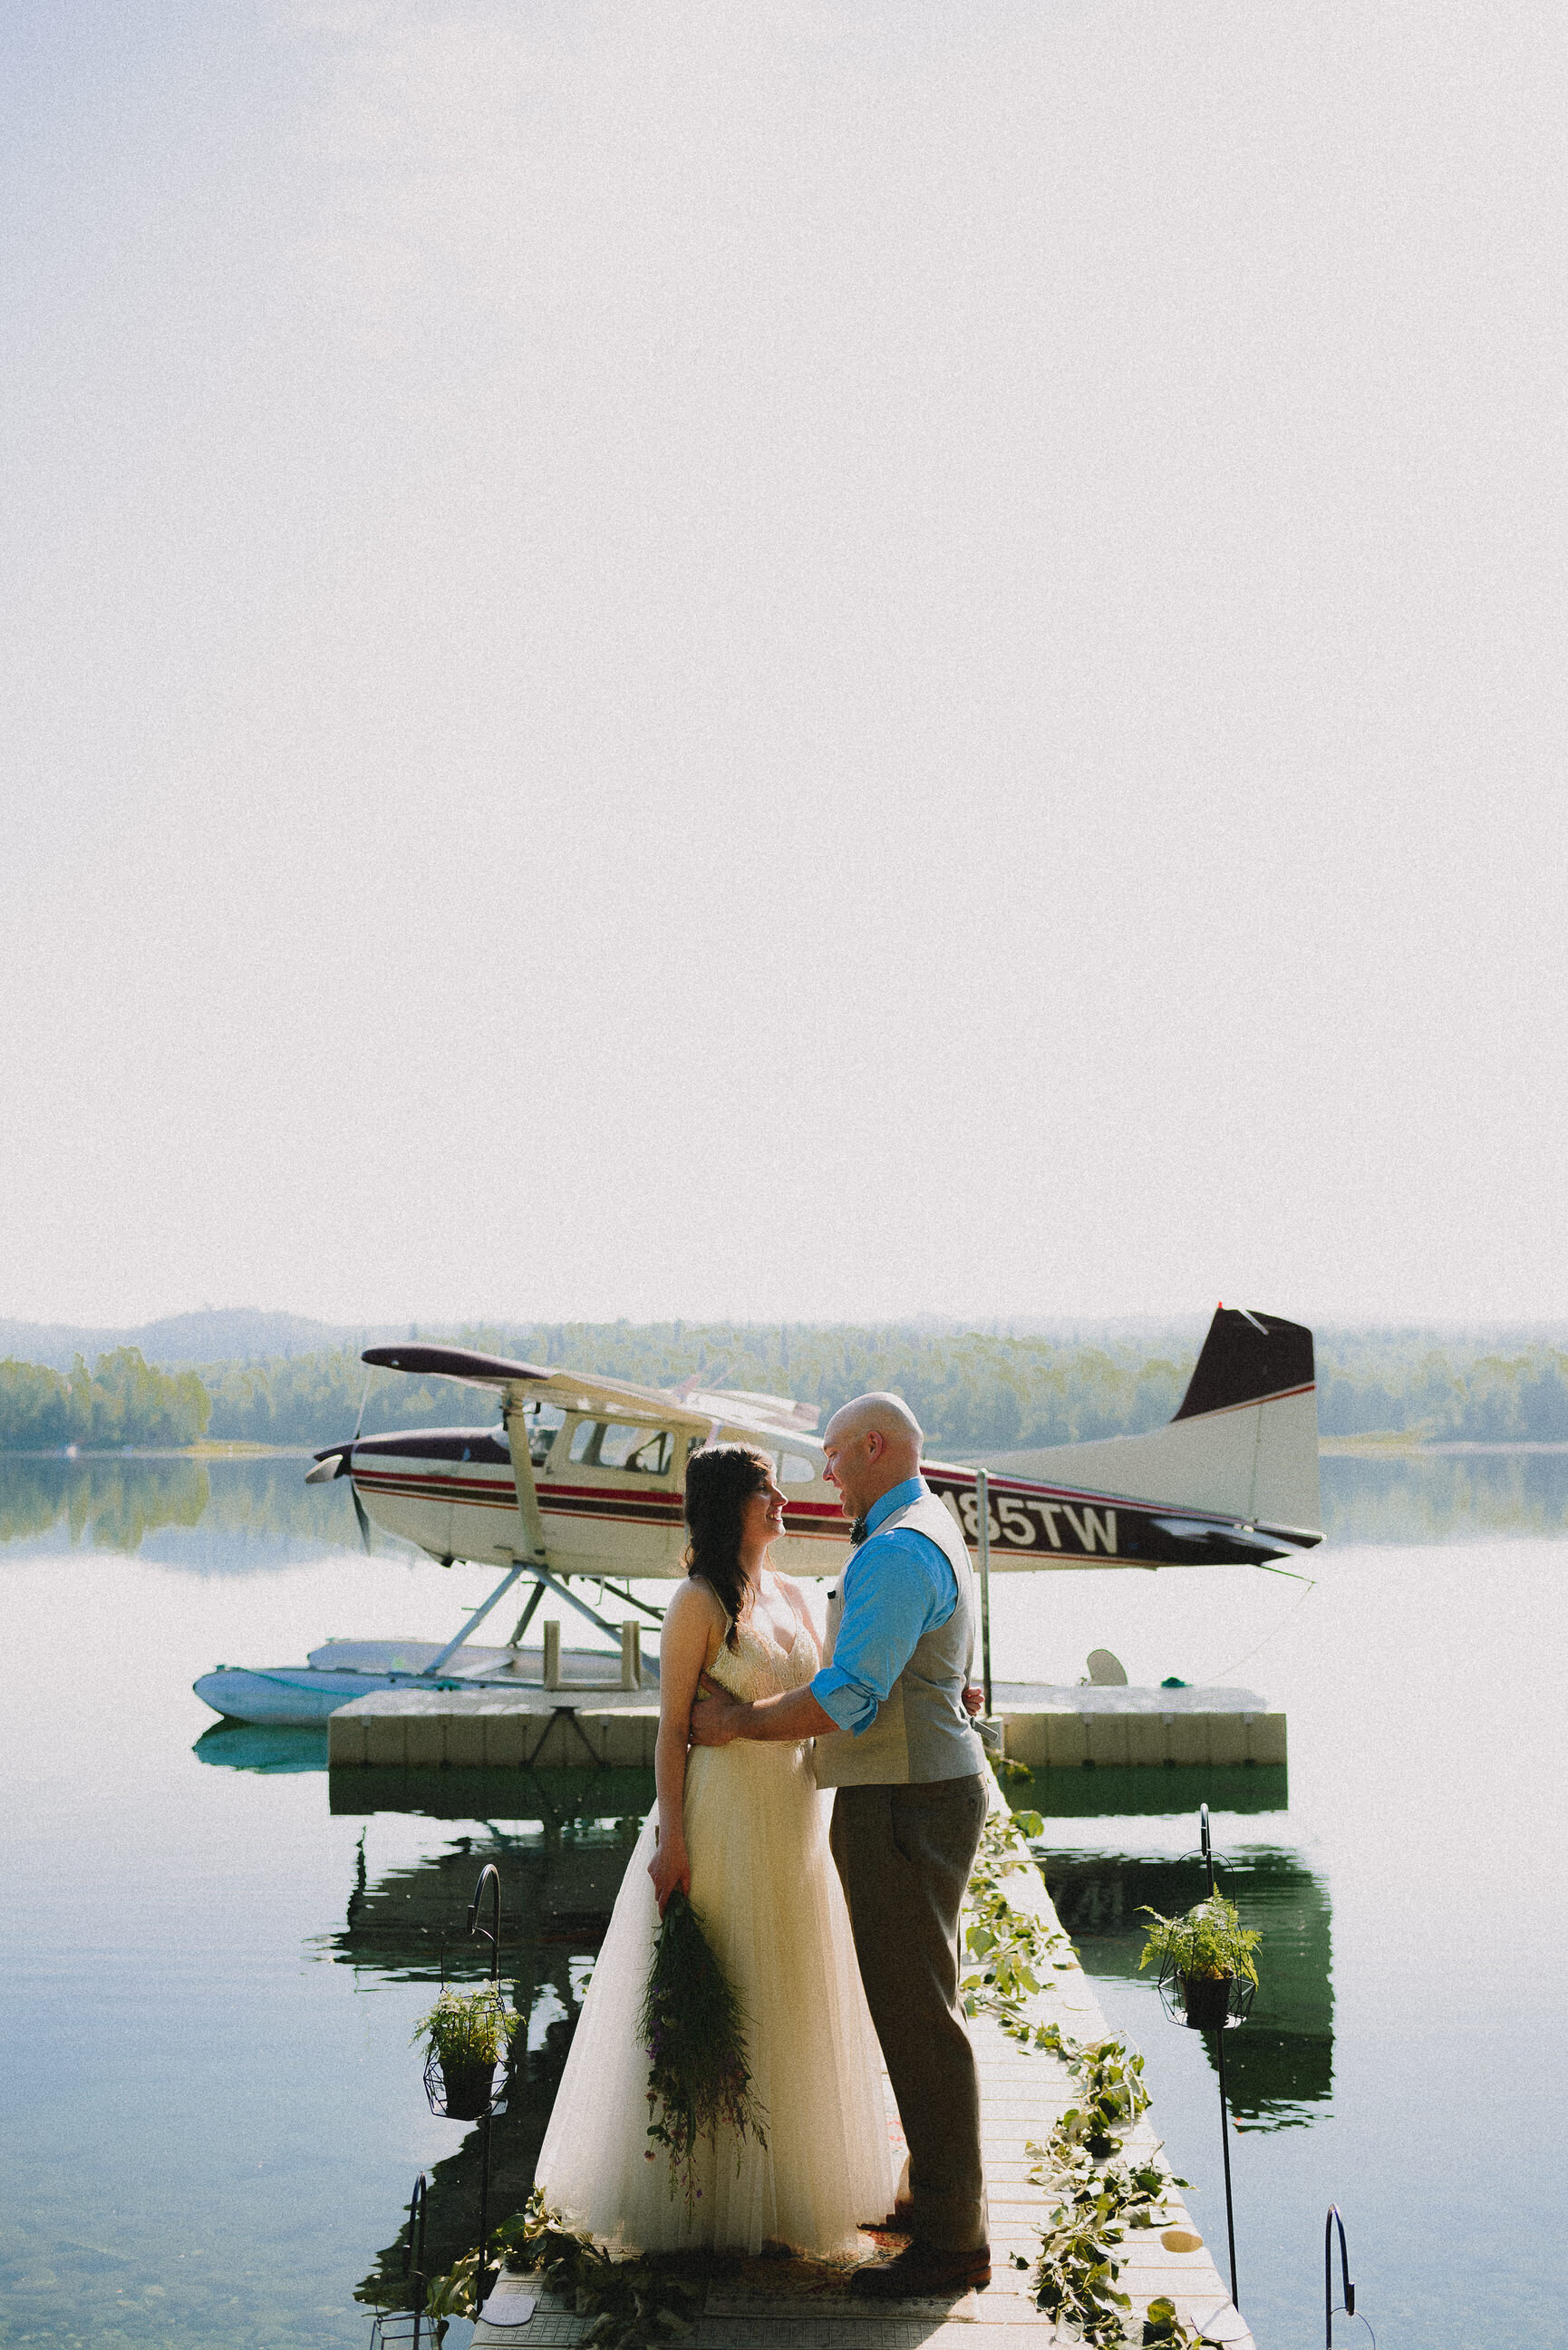 talkeetna-christiansen-lake-fourth-of-july-intimate-wedding-alaska-photographer-way-up-north-photography (389).jpg